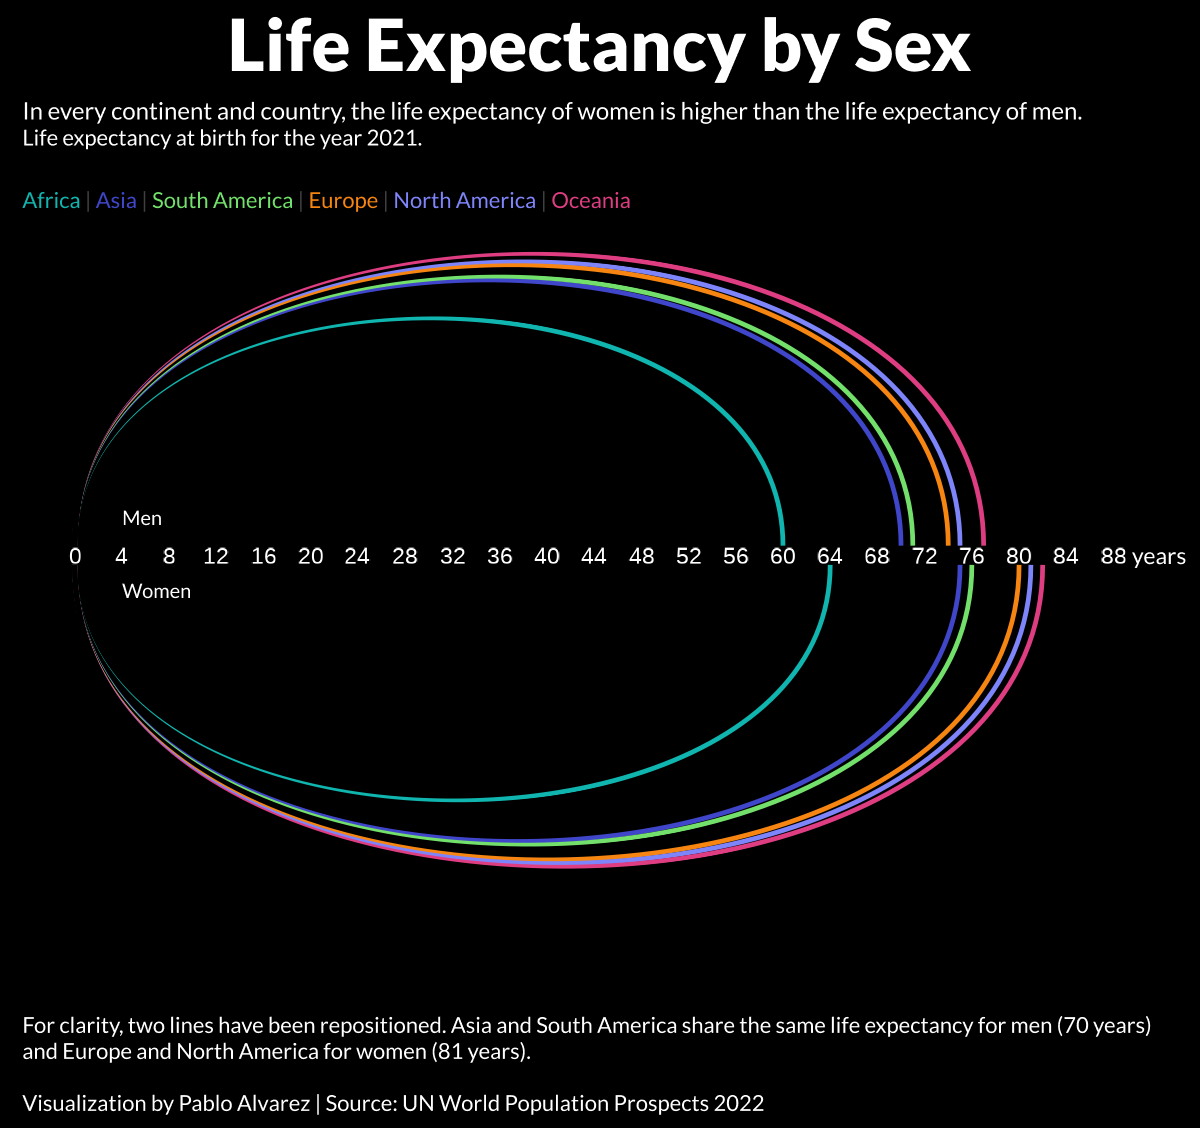 Comparing Life Expectancy men vs women across regions